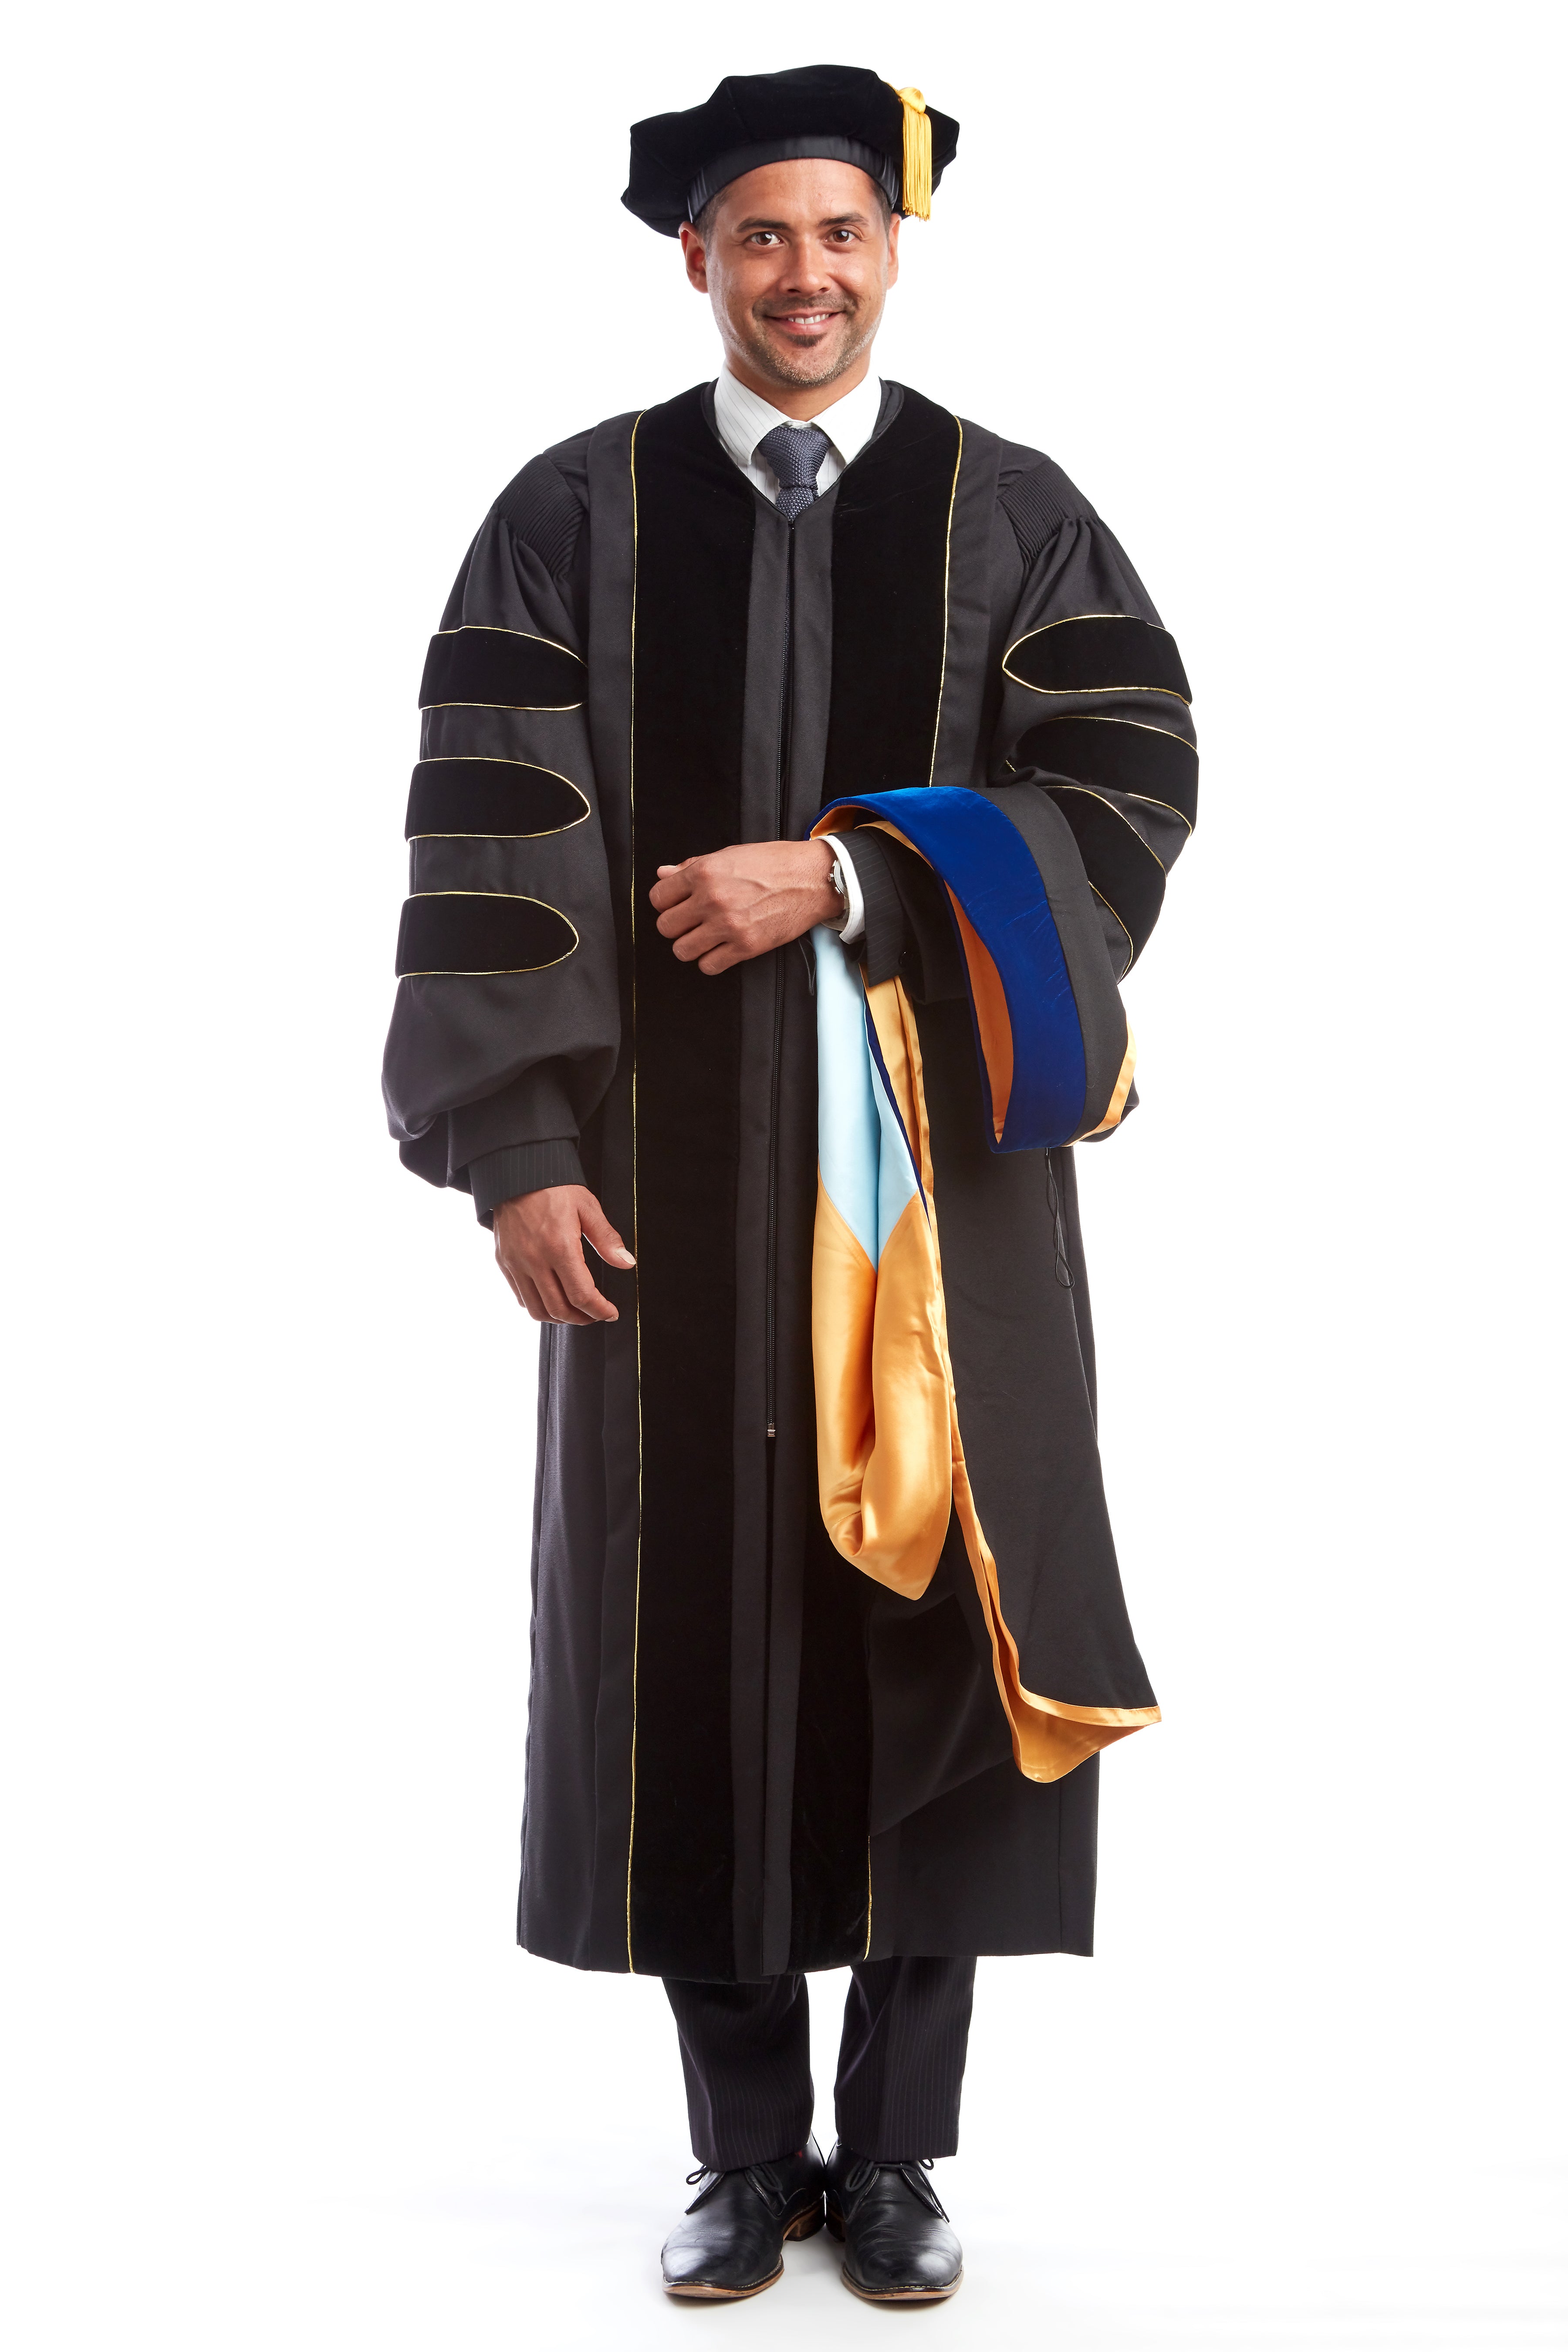 Premium Doctoral Black Gown, 8-Sided Cap / Tam, & PhD Hood Regalia Rental Set